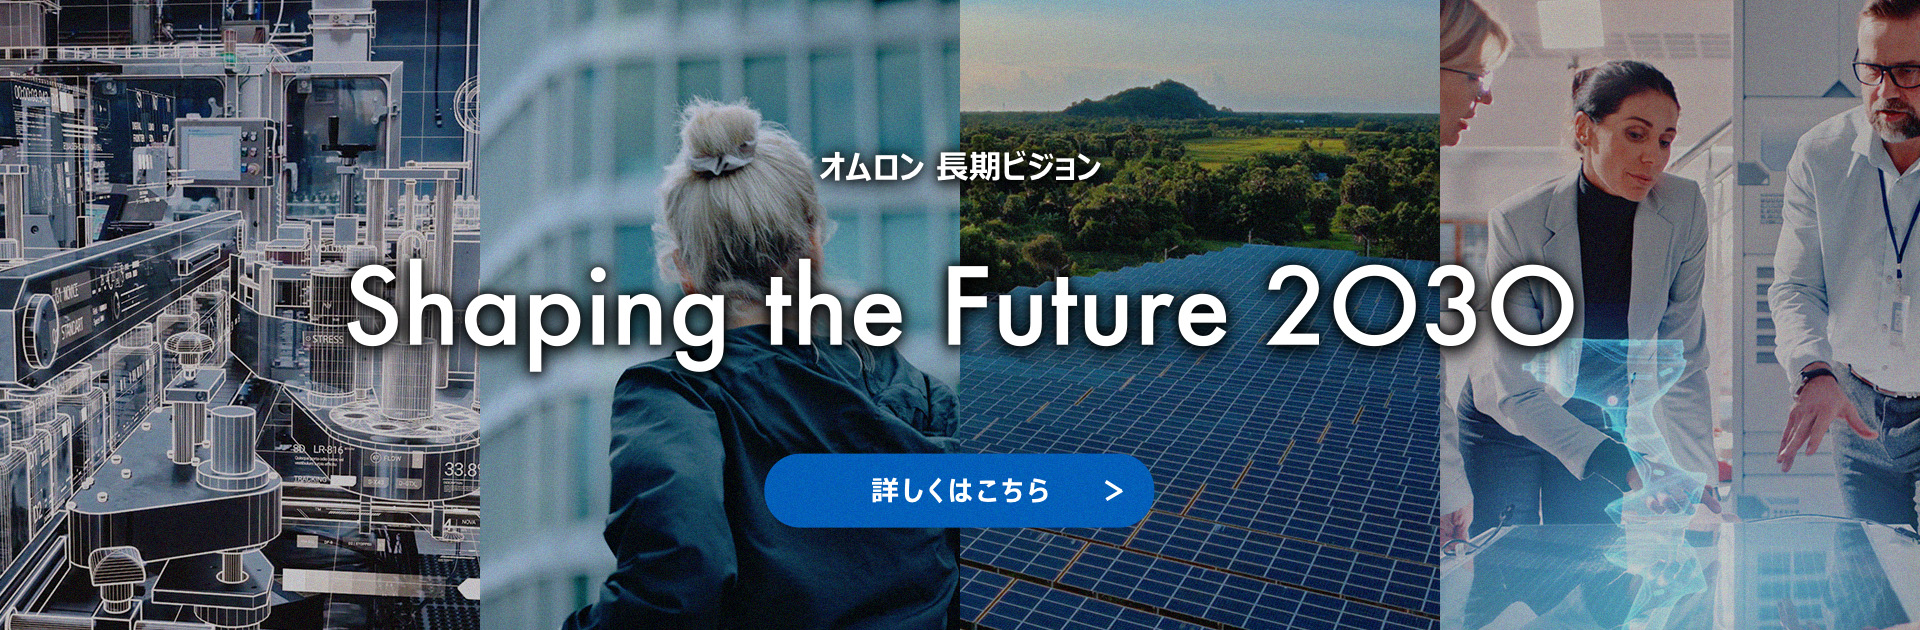 OMRON 長期ビジョンShaping the Future 2030 Starting from 2022.04.01 詳しくはこちら